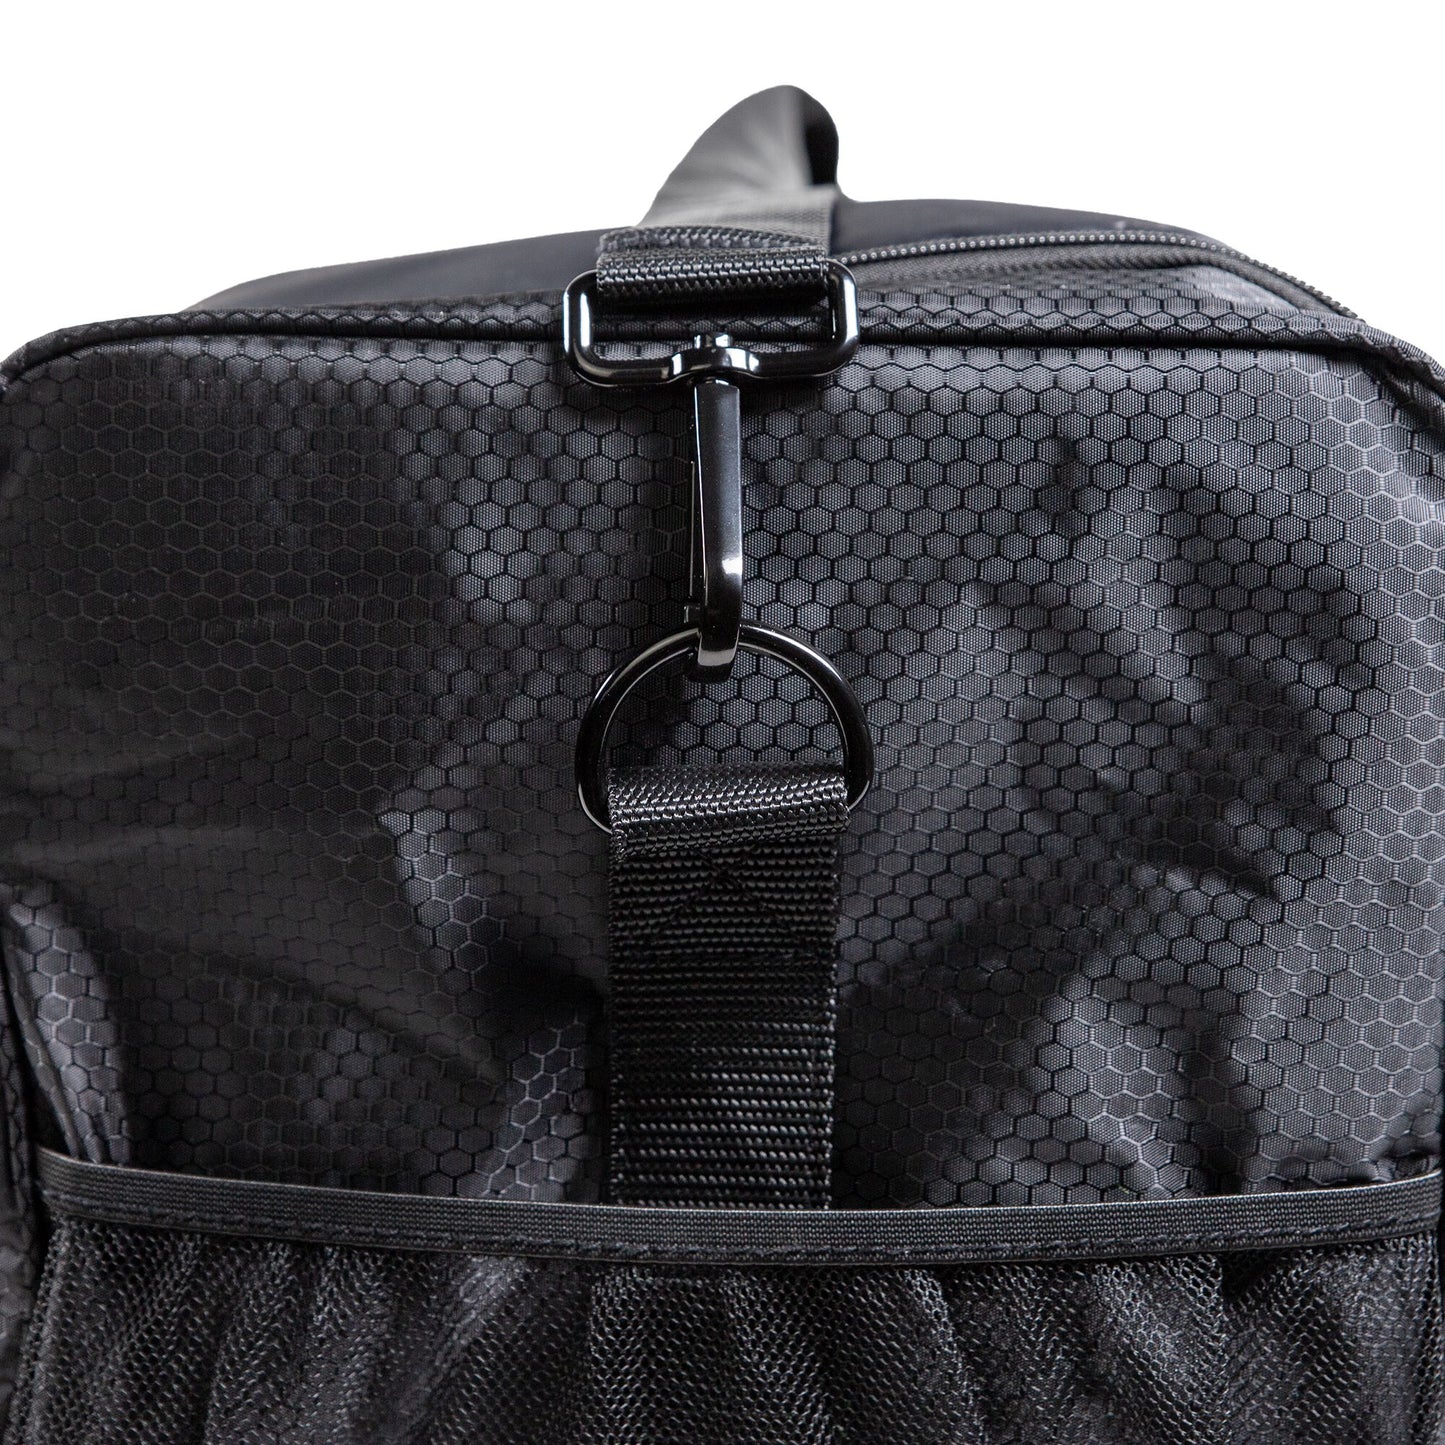 Arsenal Range Trunk Organizer & Detailing Bag With Polisher Pocket